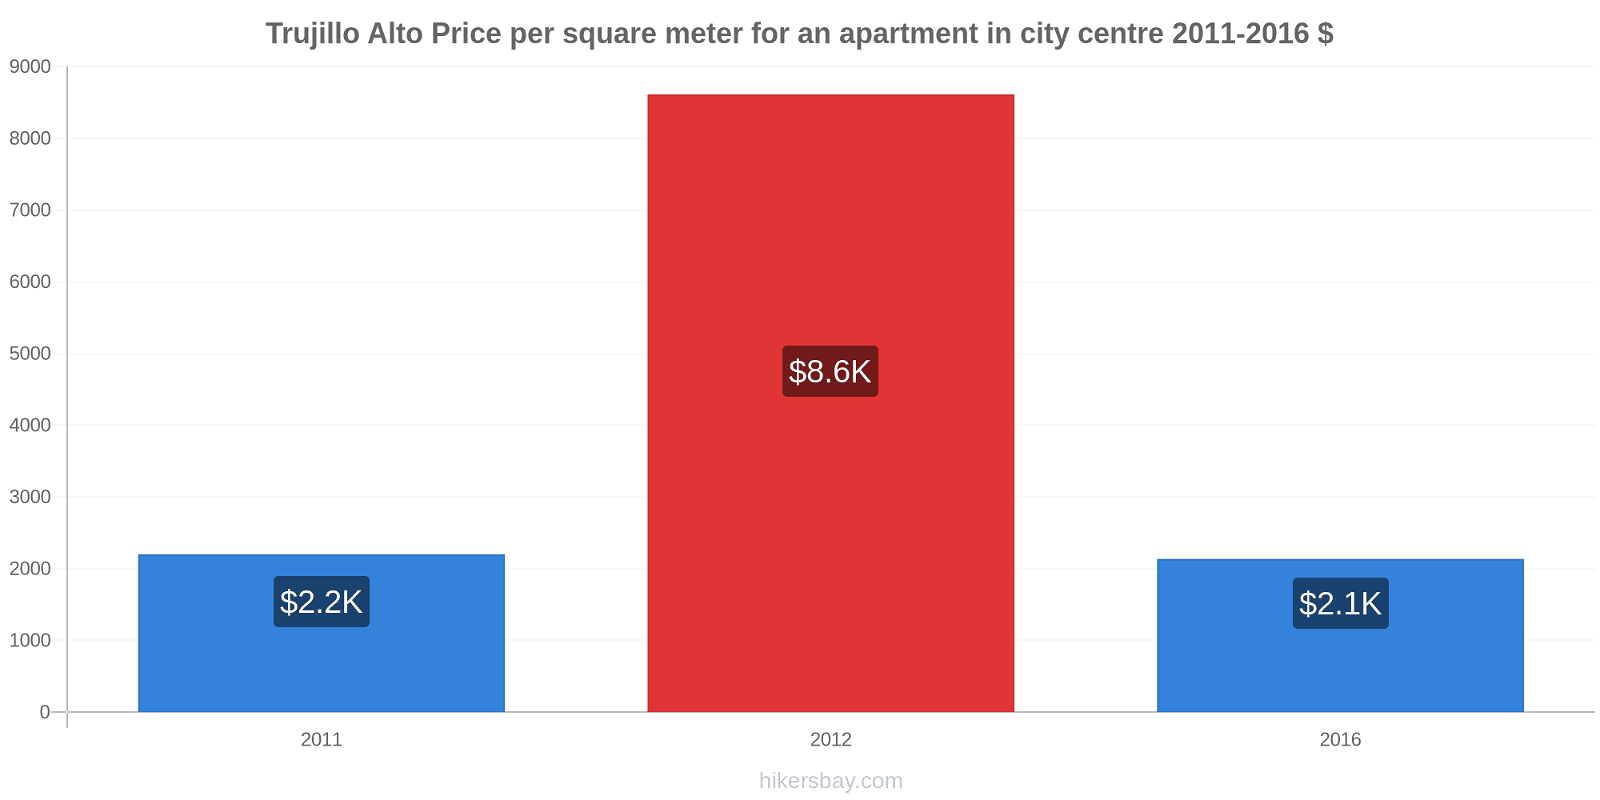 Trujillo Alto price changes Price per square meter for an apartment in city centre hikersbay.com